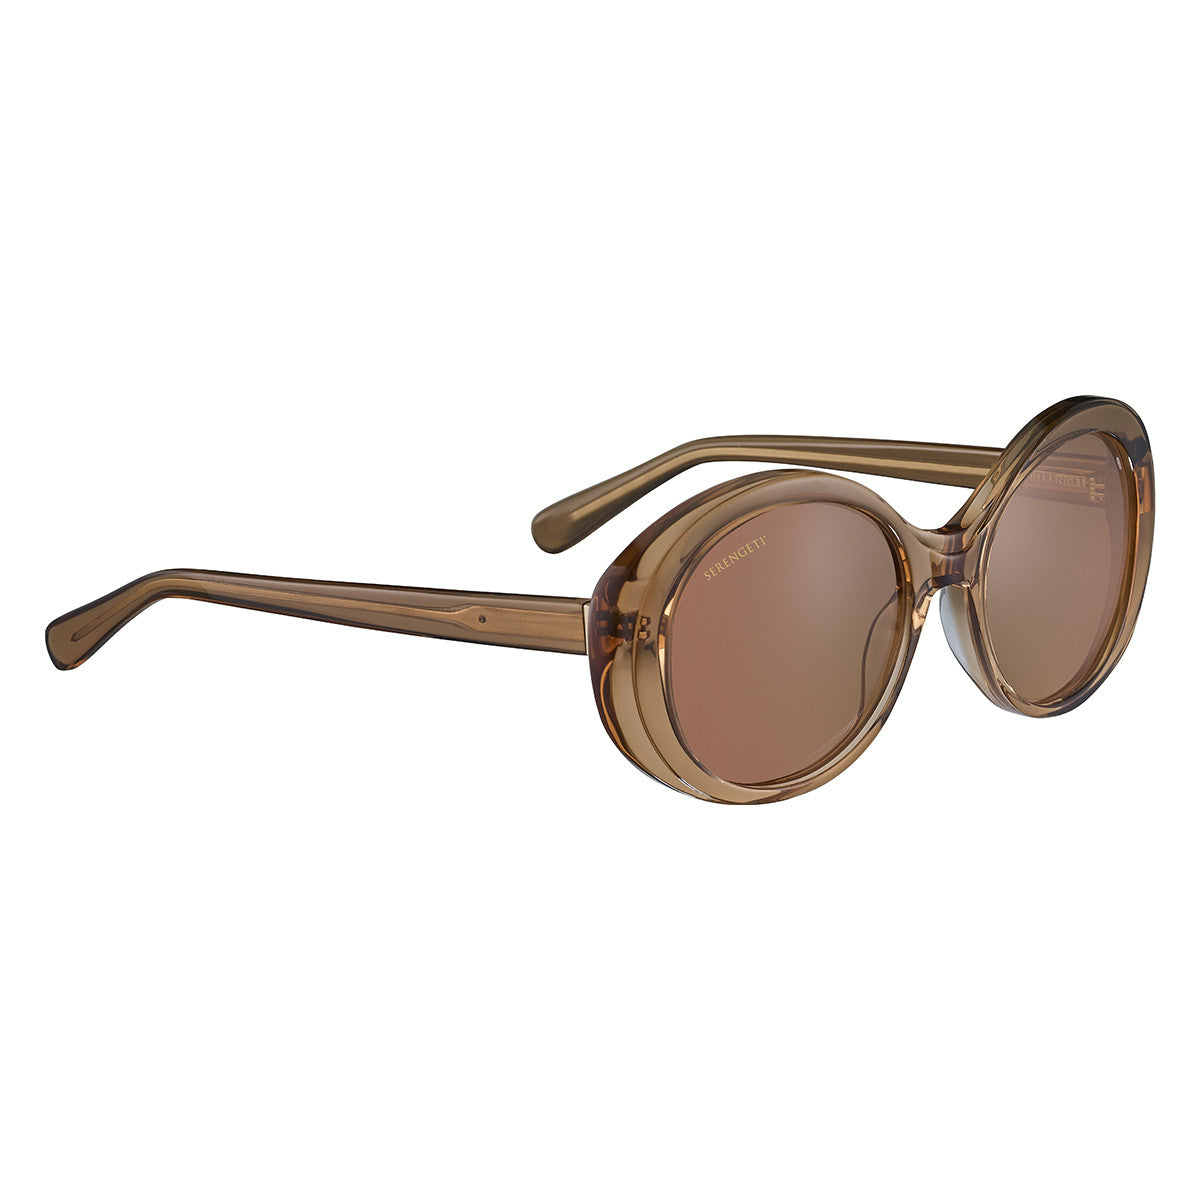 Serengeti Bacall Sunglasses  Shiny Crystal Sand Beige Small, Medium